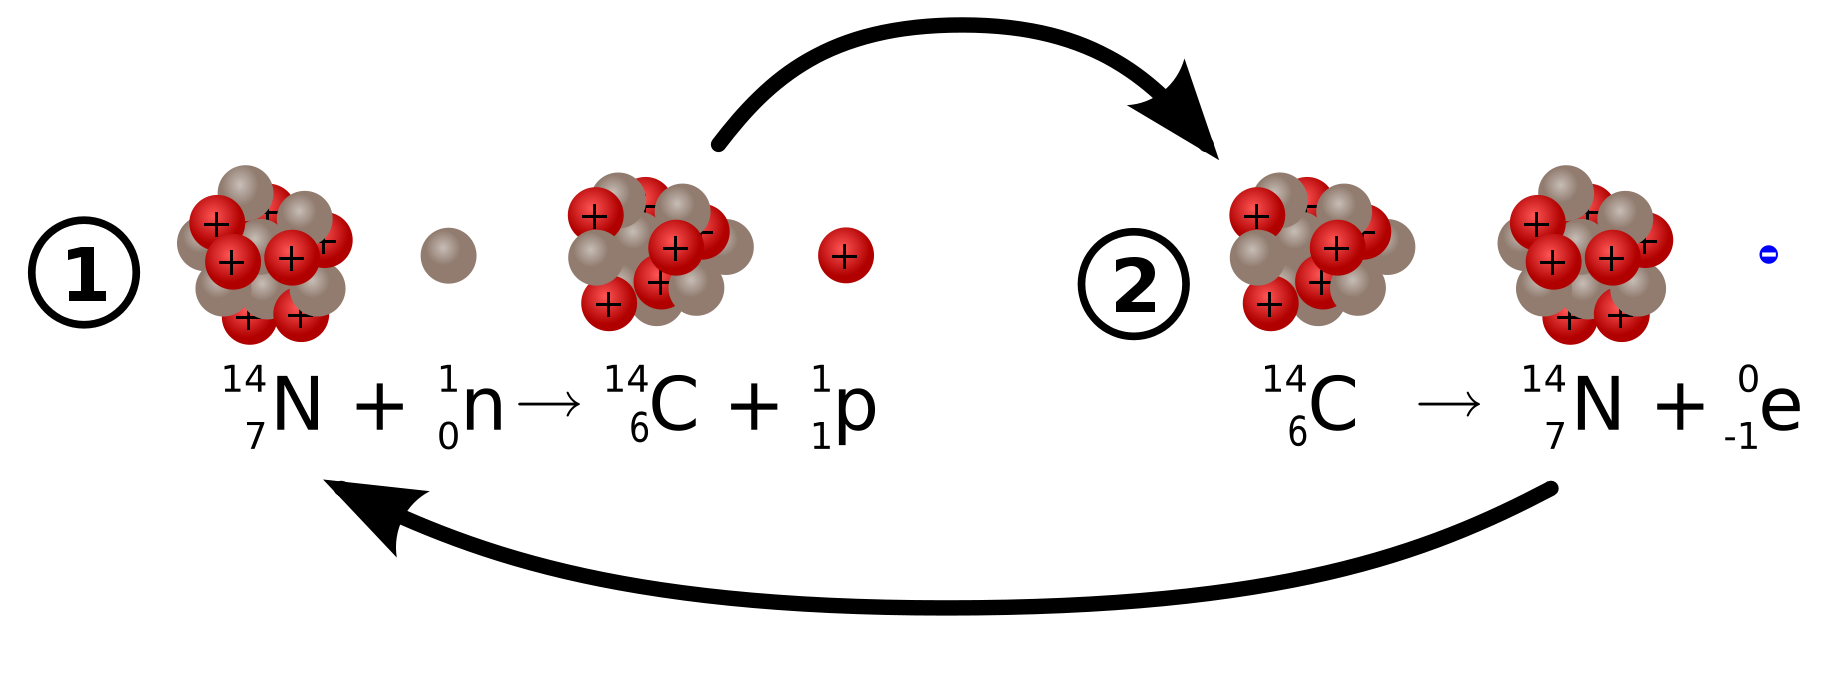 Бета распад углерода 14. Схема распада углерода 14. Схемы радиоактивного распада углерода 14. Изотоп углерода радиоактивный распад. Бета распад углерода.